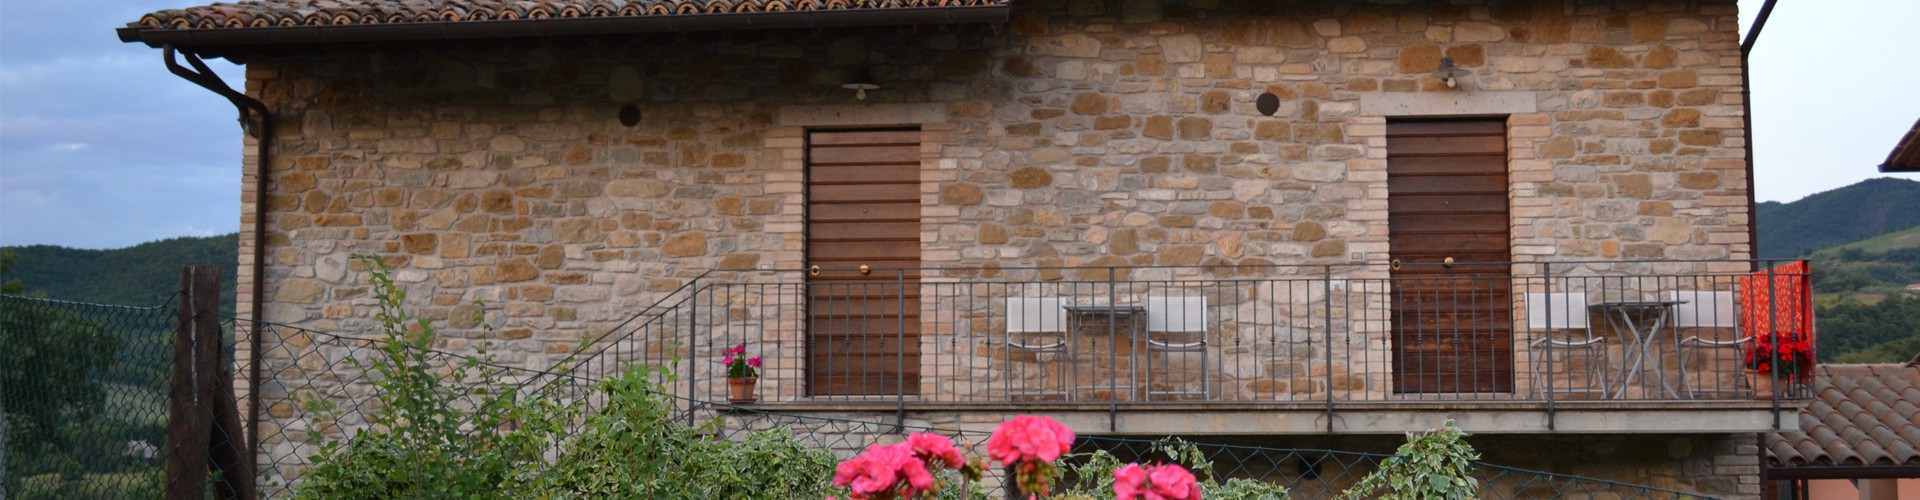 Relais Parco del Subasio | Agriturismo Assisi - Residenza Perugia Featured Image